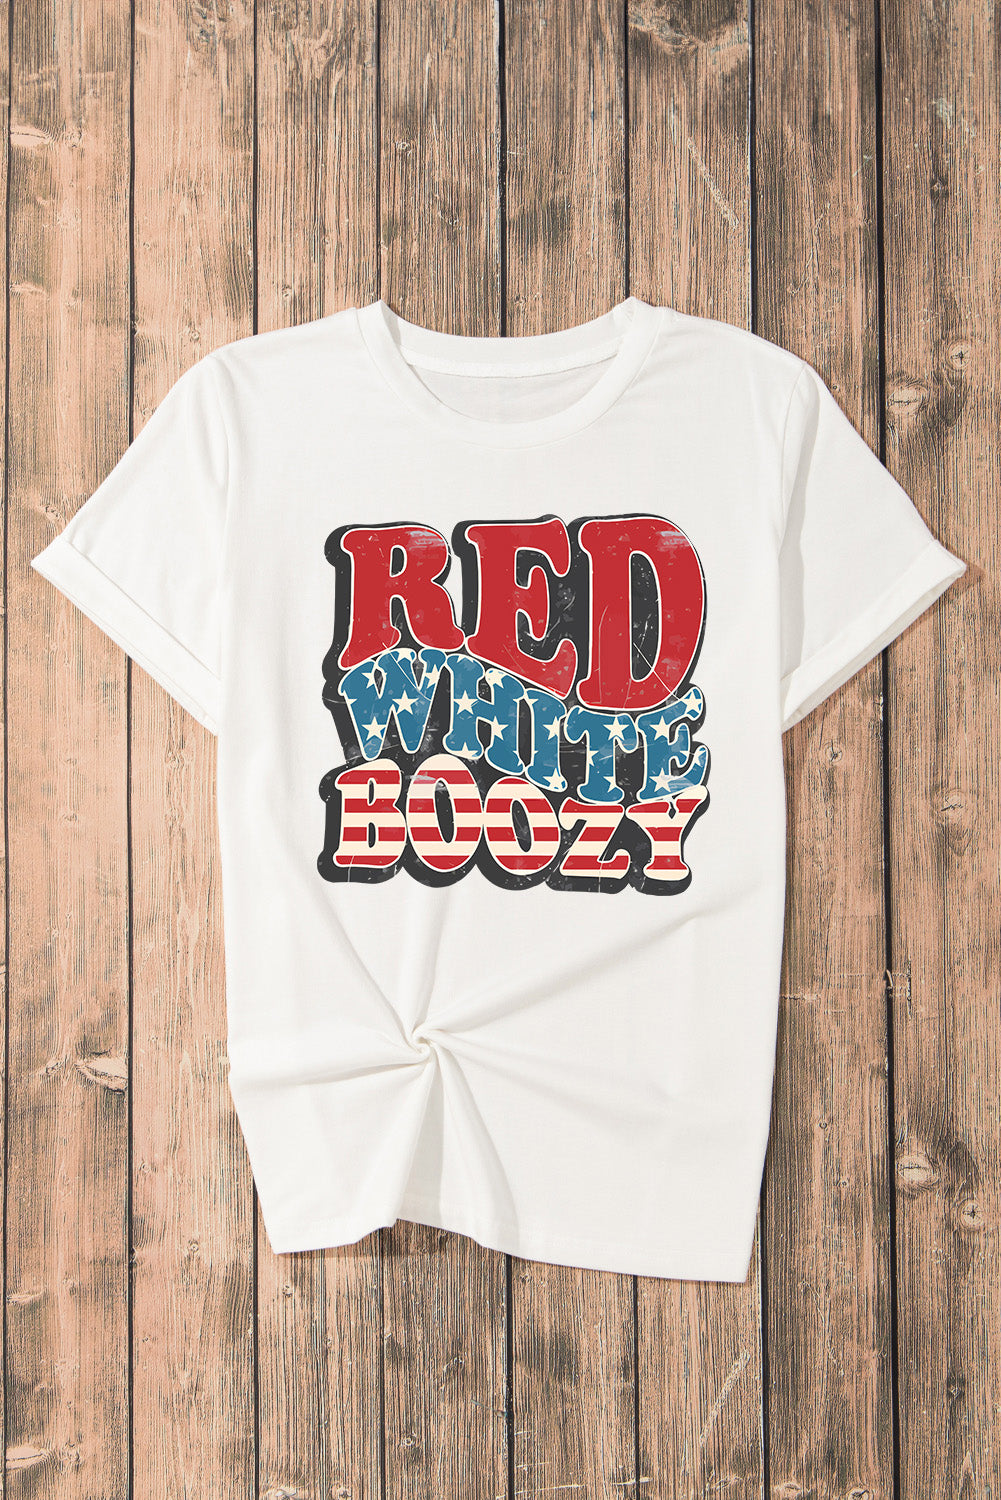 "Red White Boozy" Graphic T-Shirt